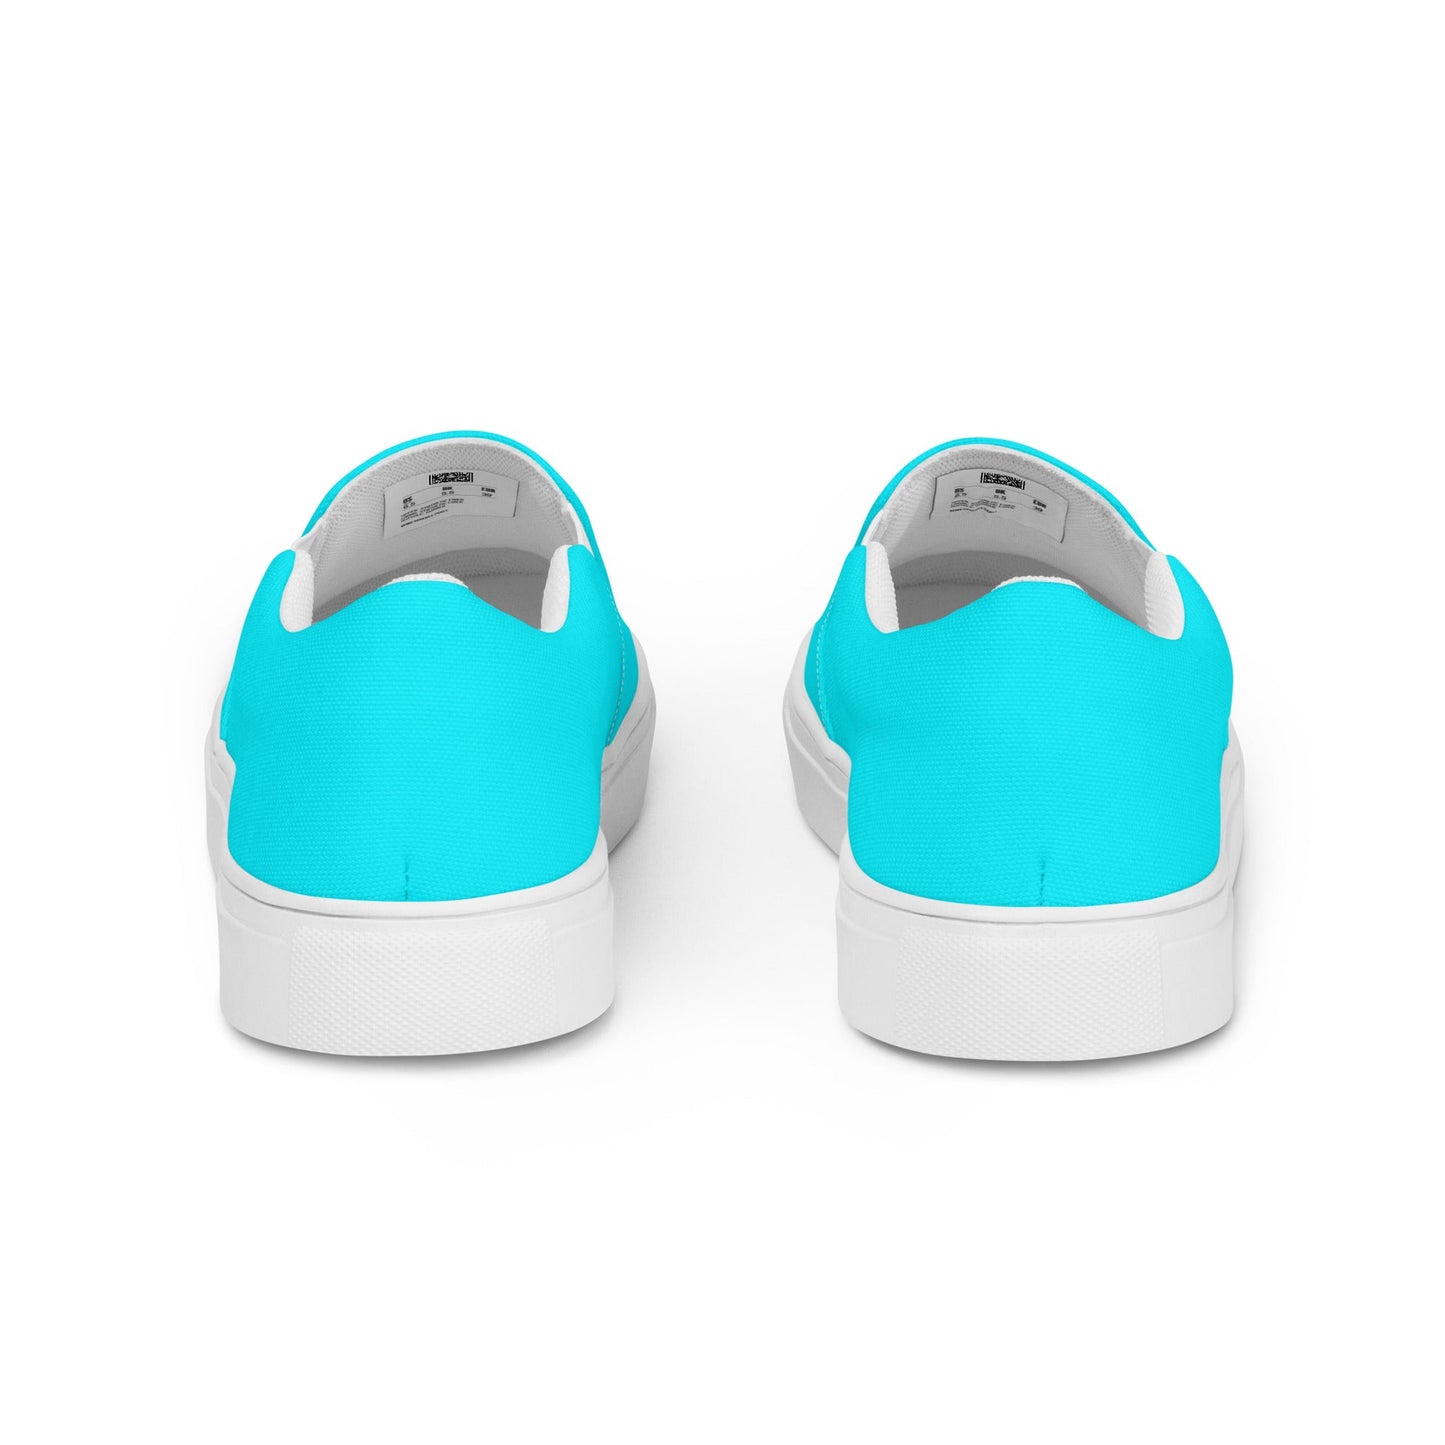 klasneakers Women’s slip-on canvas shoes - Cool Pool Aqua Blue